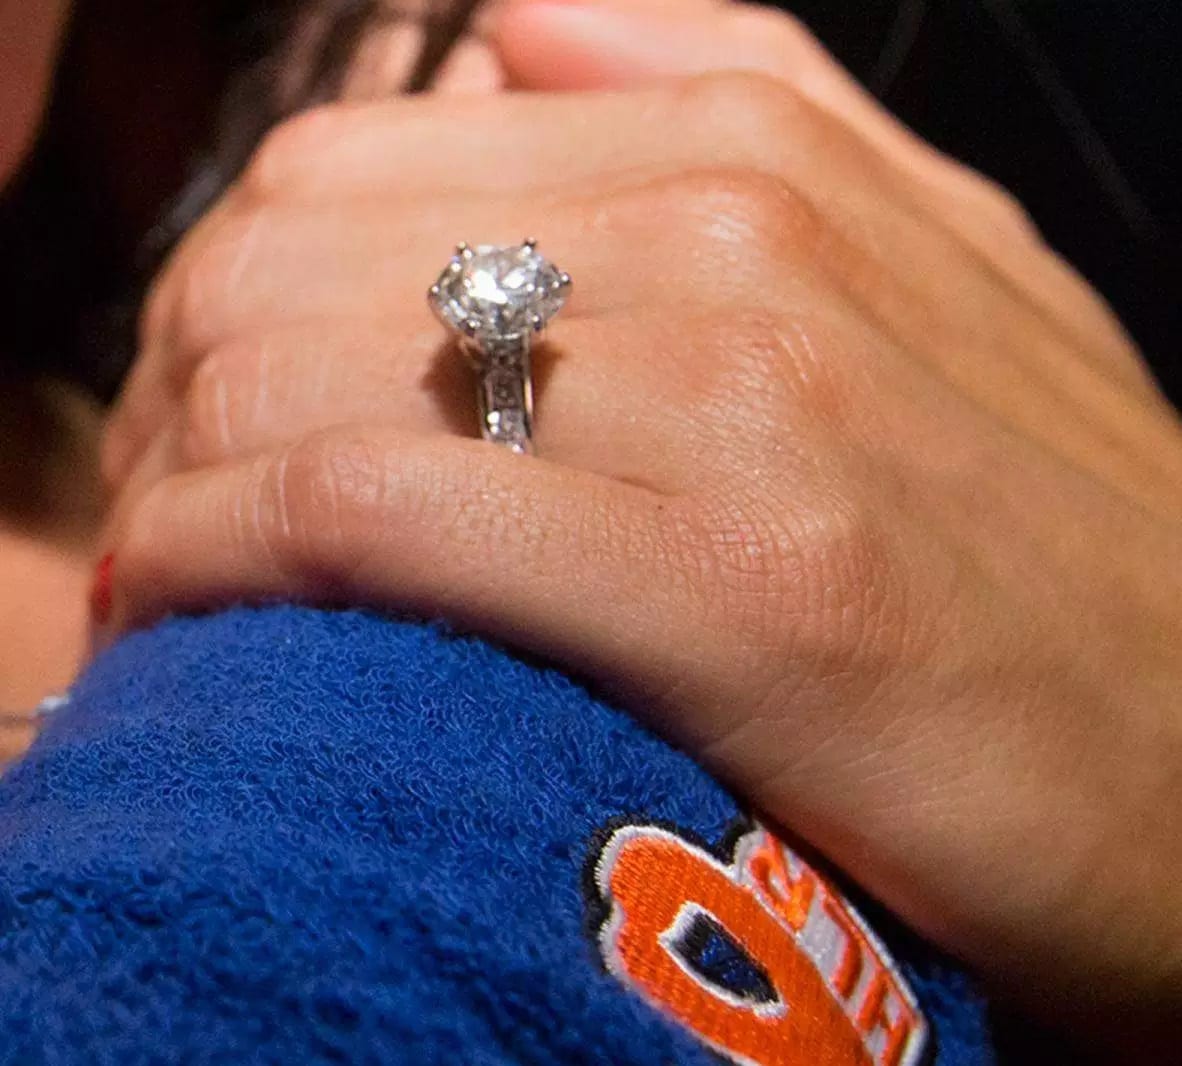 John Cena Bought The Wrong Sized Engagement Ring For Nikki Bella